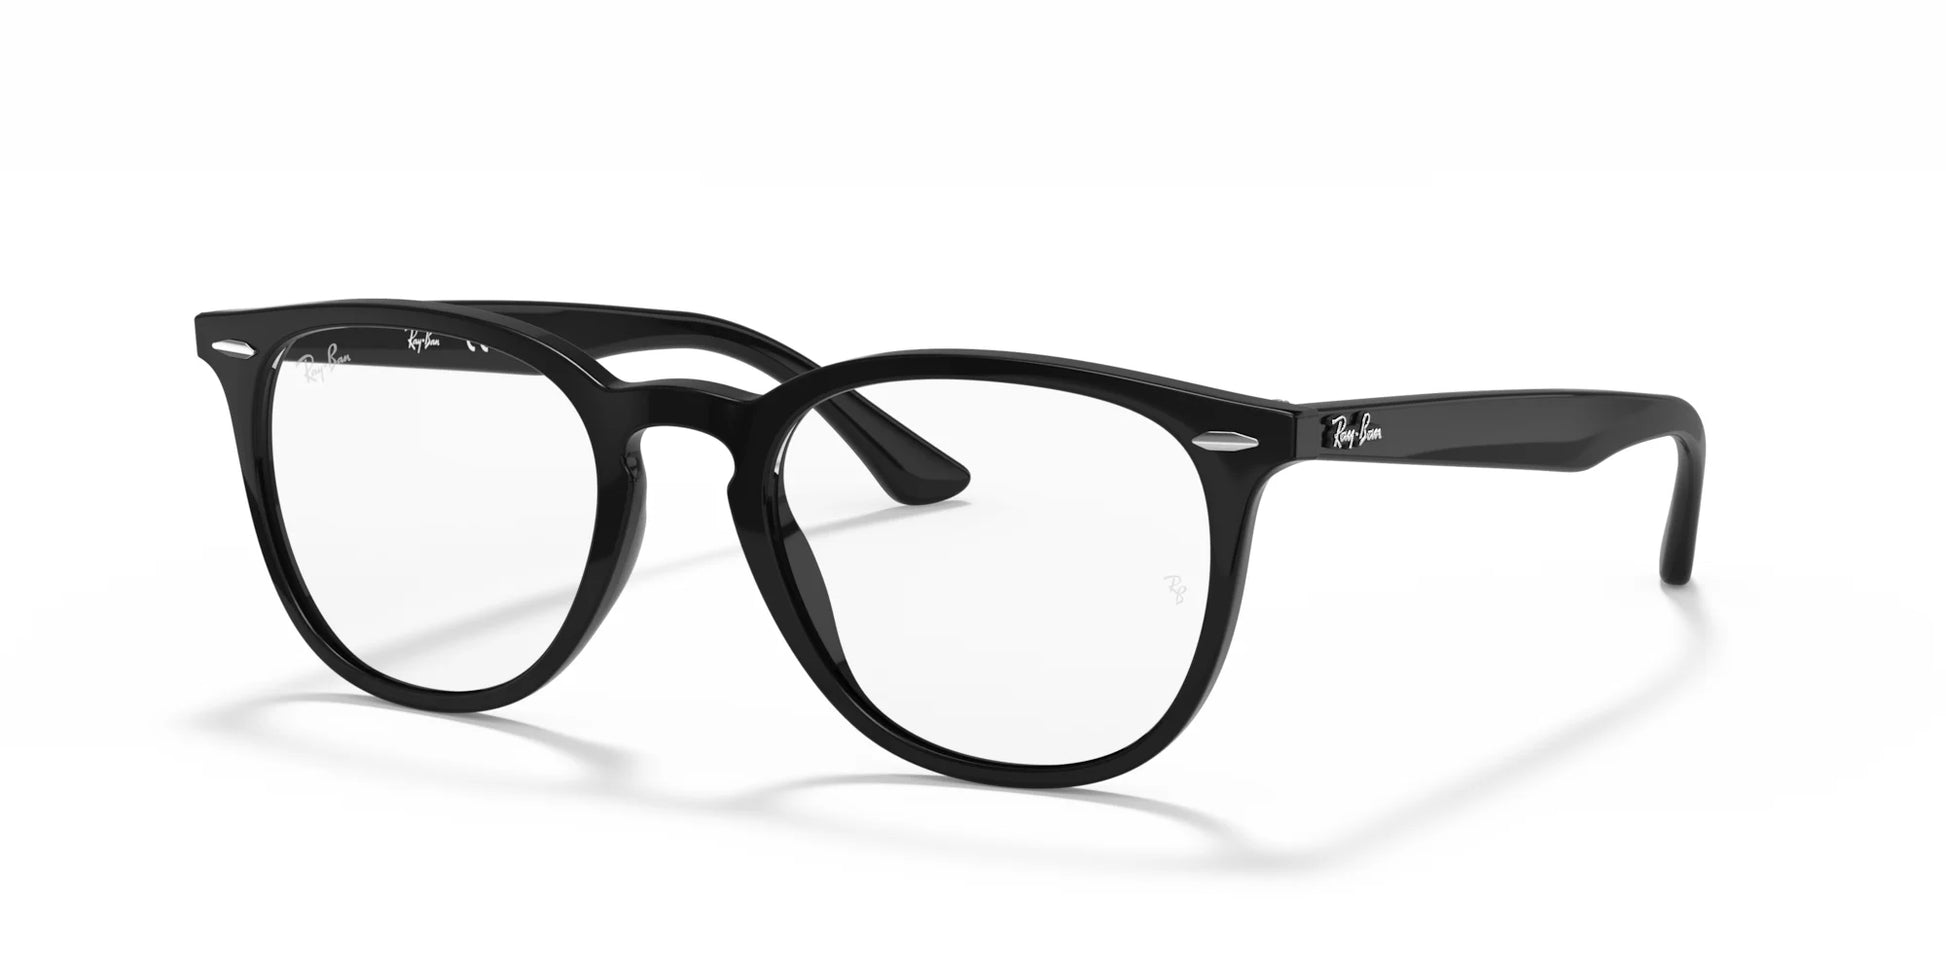 Ray-Ban RX7159 Eyeglasses Black / Clear